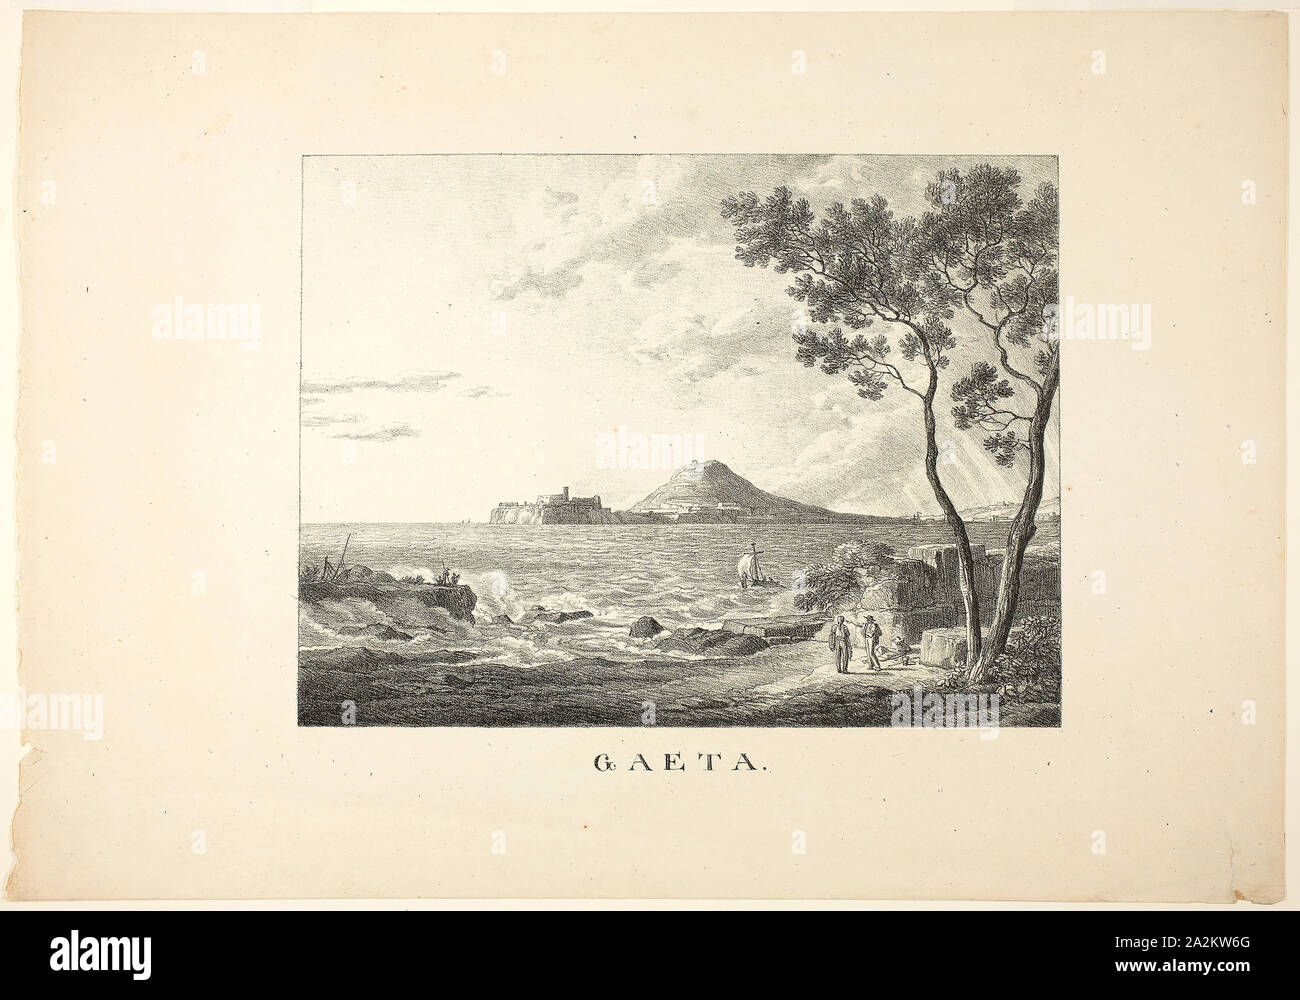 Gaeta, 1807, Simon Petrus Klotz, German, 1776-1824, Germany, Lithograph on wove paper, 340 x 482 mm Stock Photo